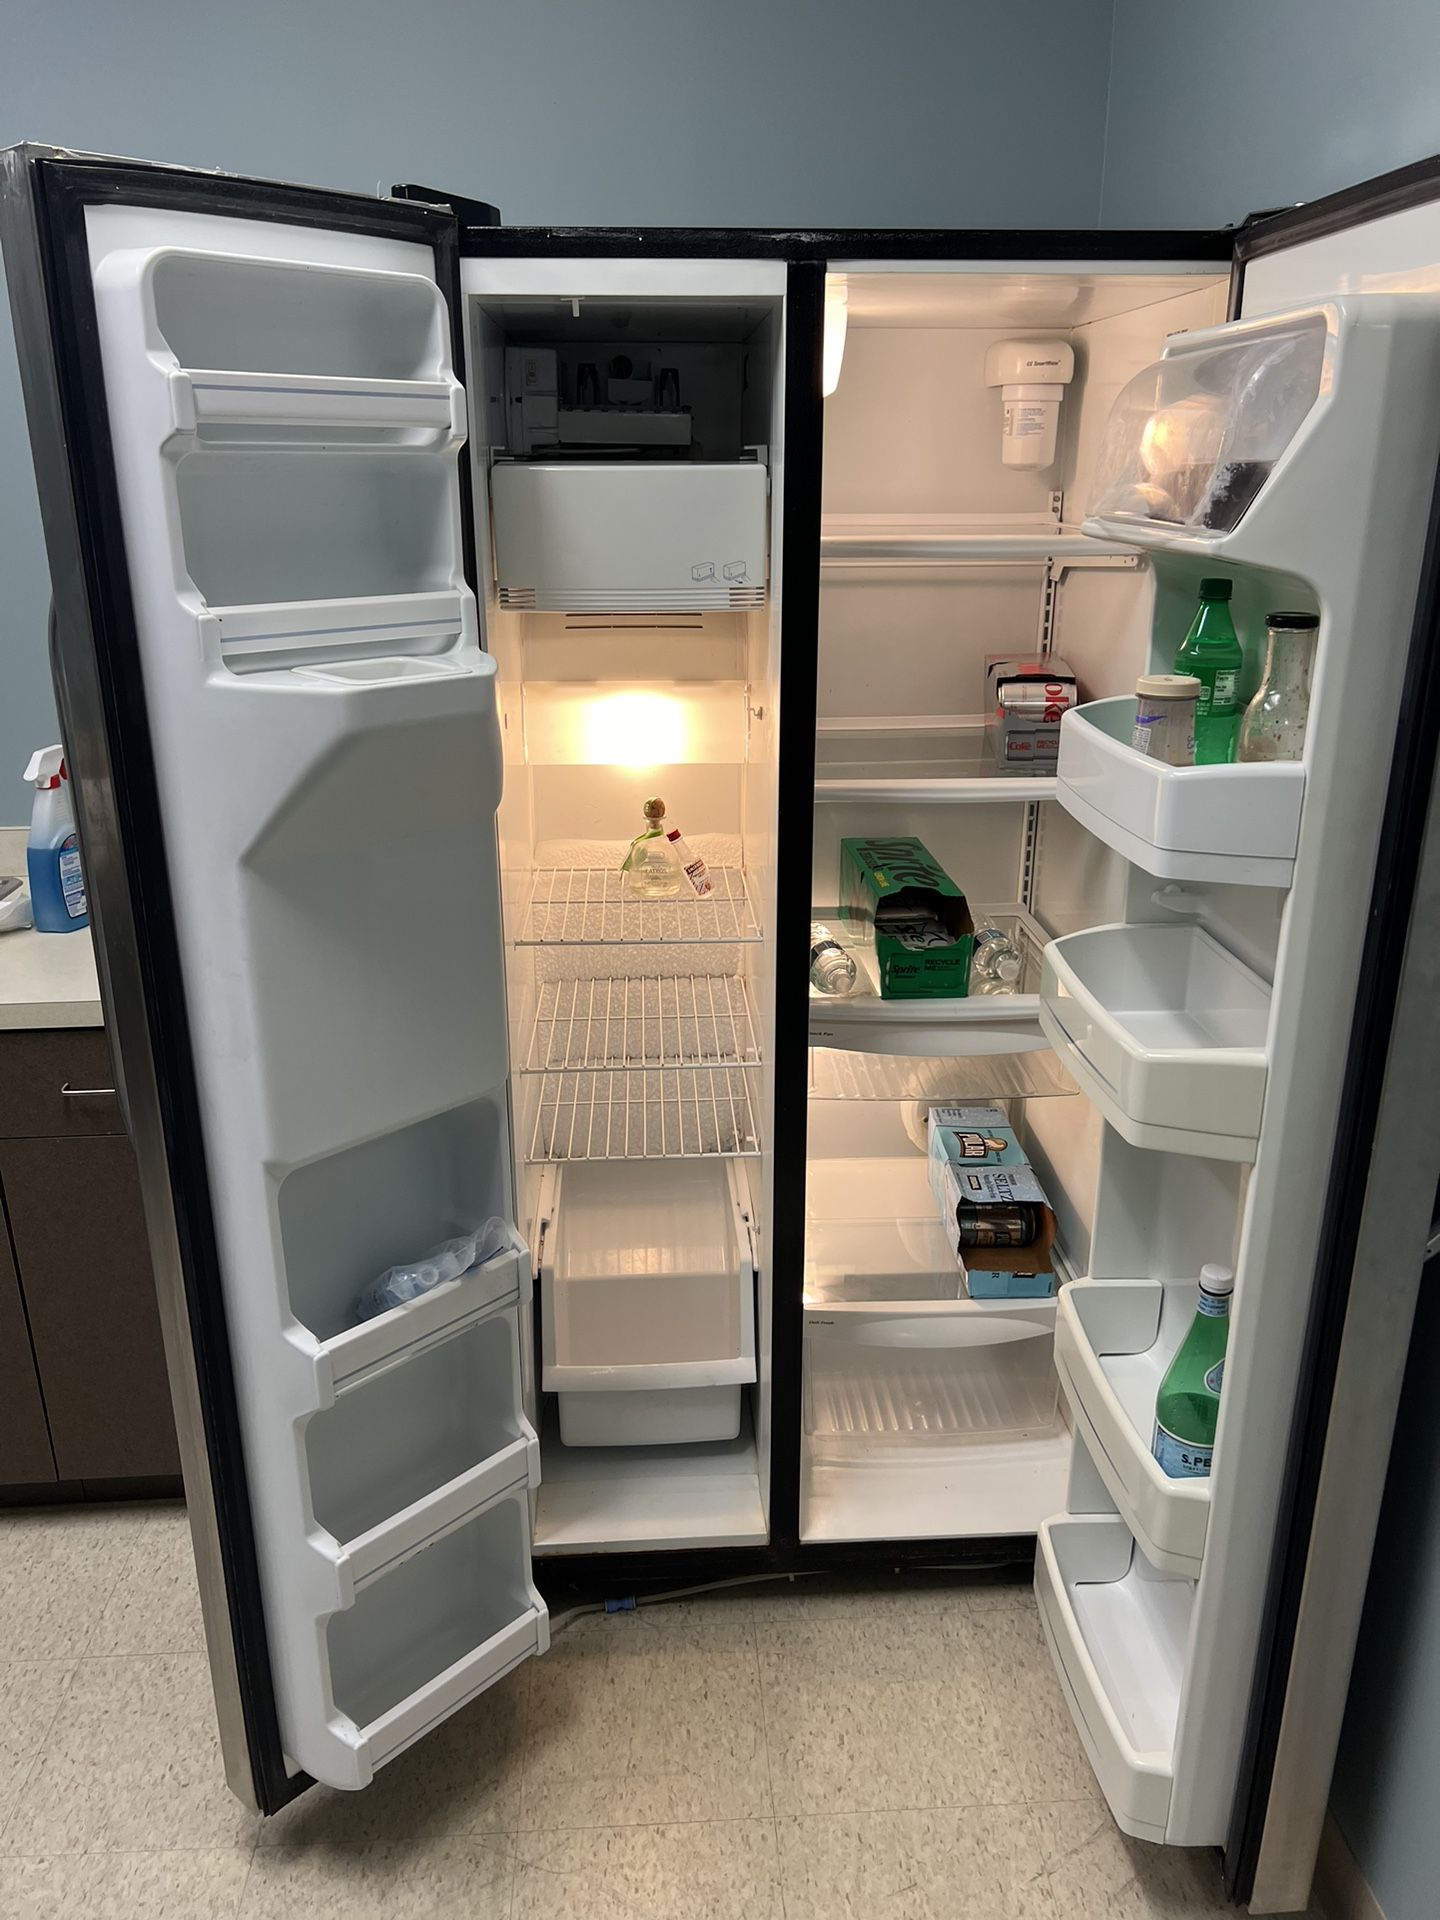 Refrigerator Freezer